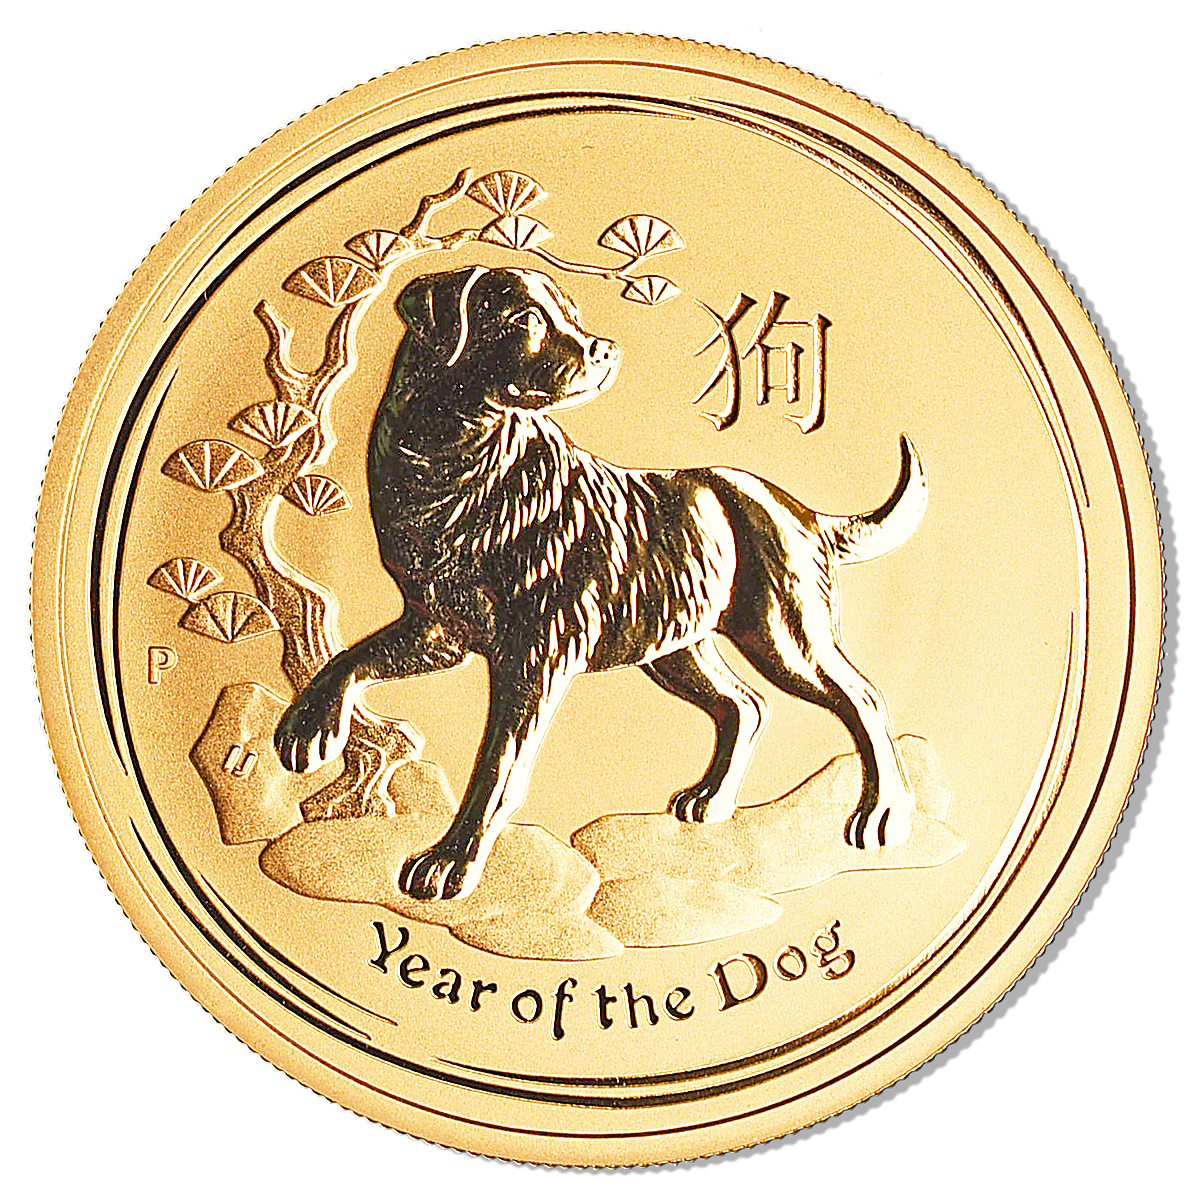 Bendog монета. Year of the Dog 2018 монета. Серебро Лунар 2 год собаки. Тама дог монета. Lunar Gold.